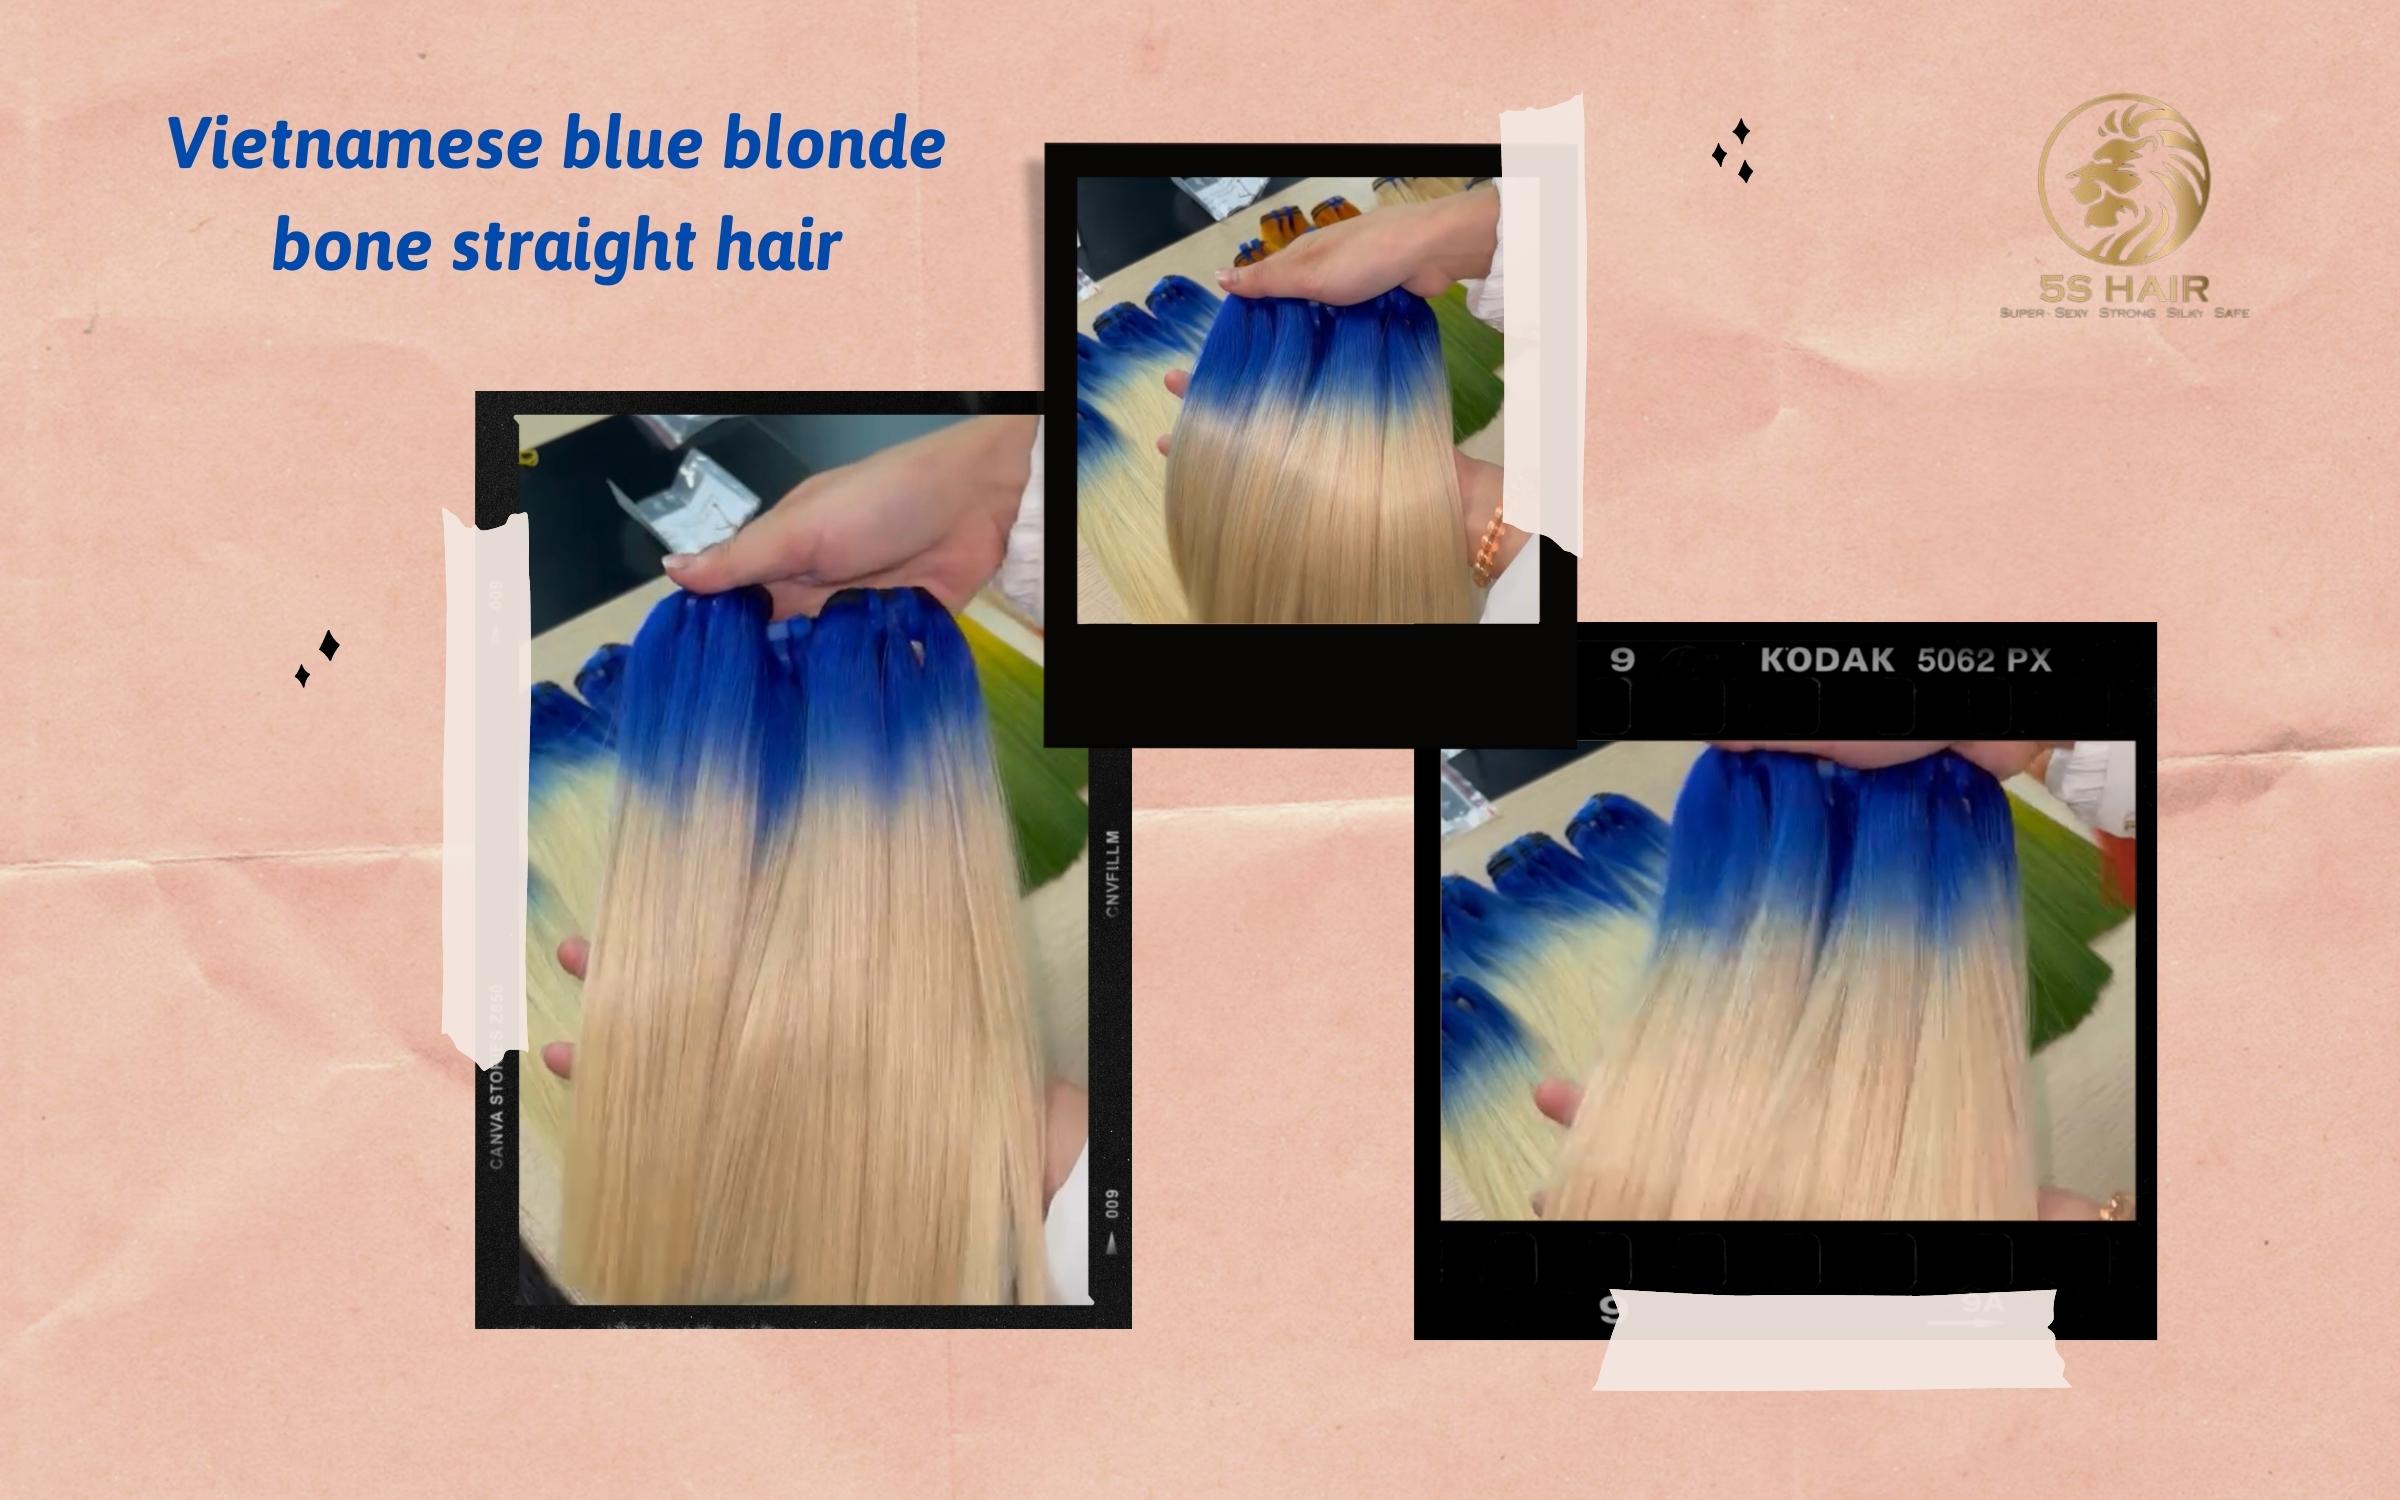 vietnamese-blonde-blue-bone-straight-hair3